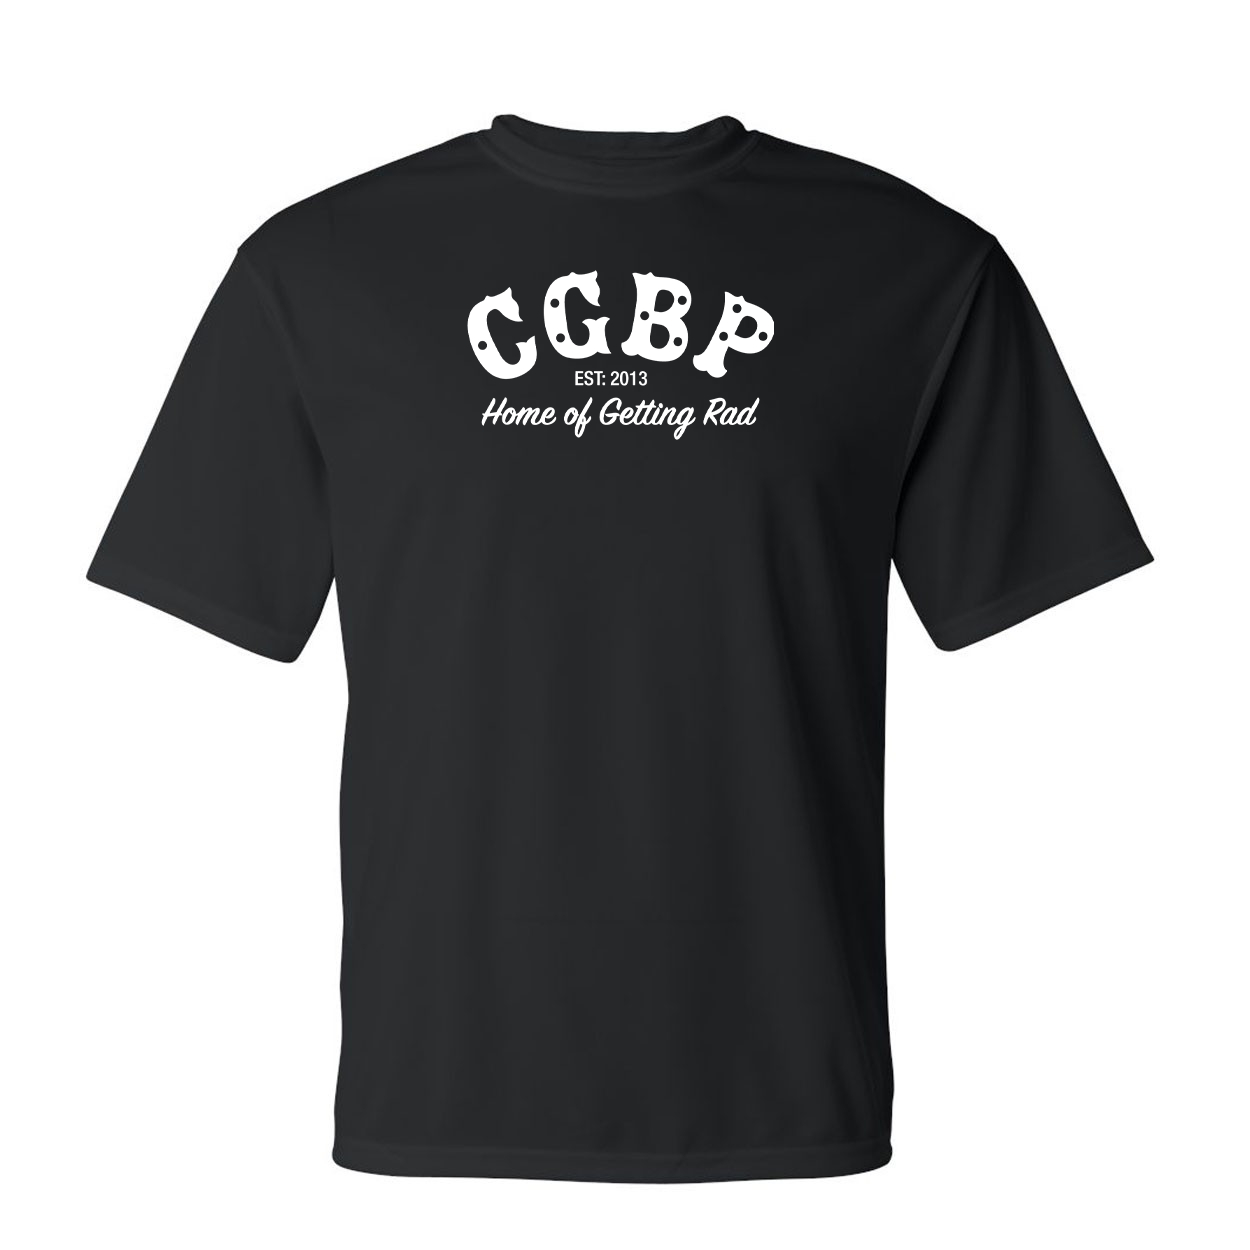 Cottage Grove Bike Park Classic Unisex Performance T-Shirt Black